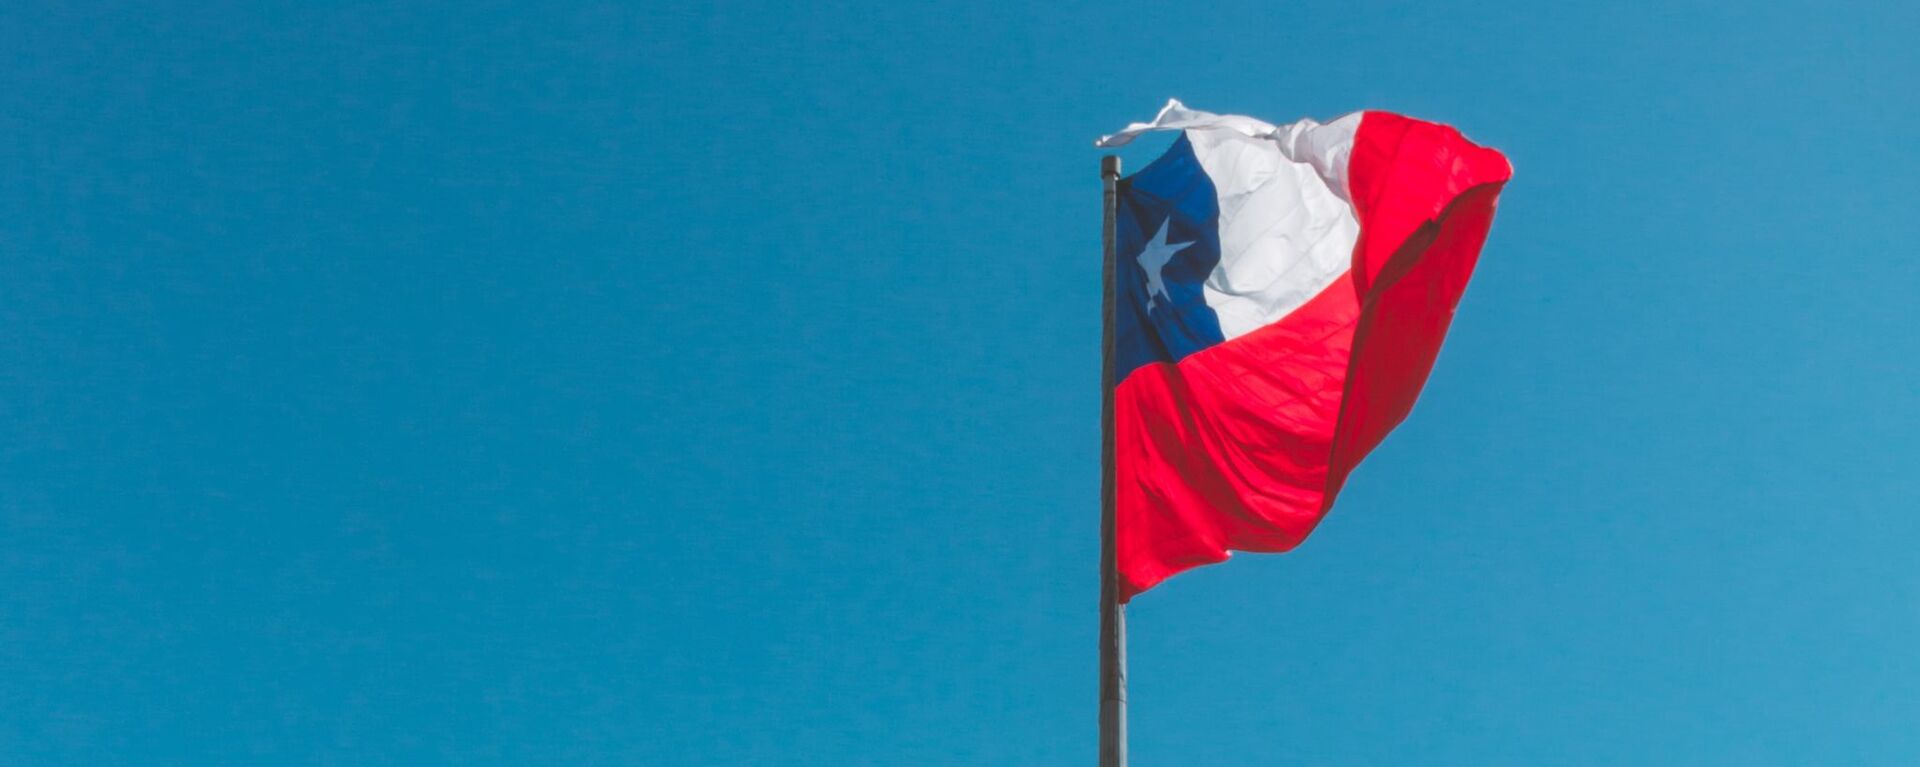 La bandera de Chile - Sputnik Mundo, 1920, 01.07.2021